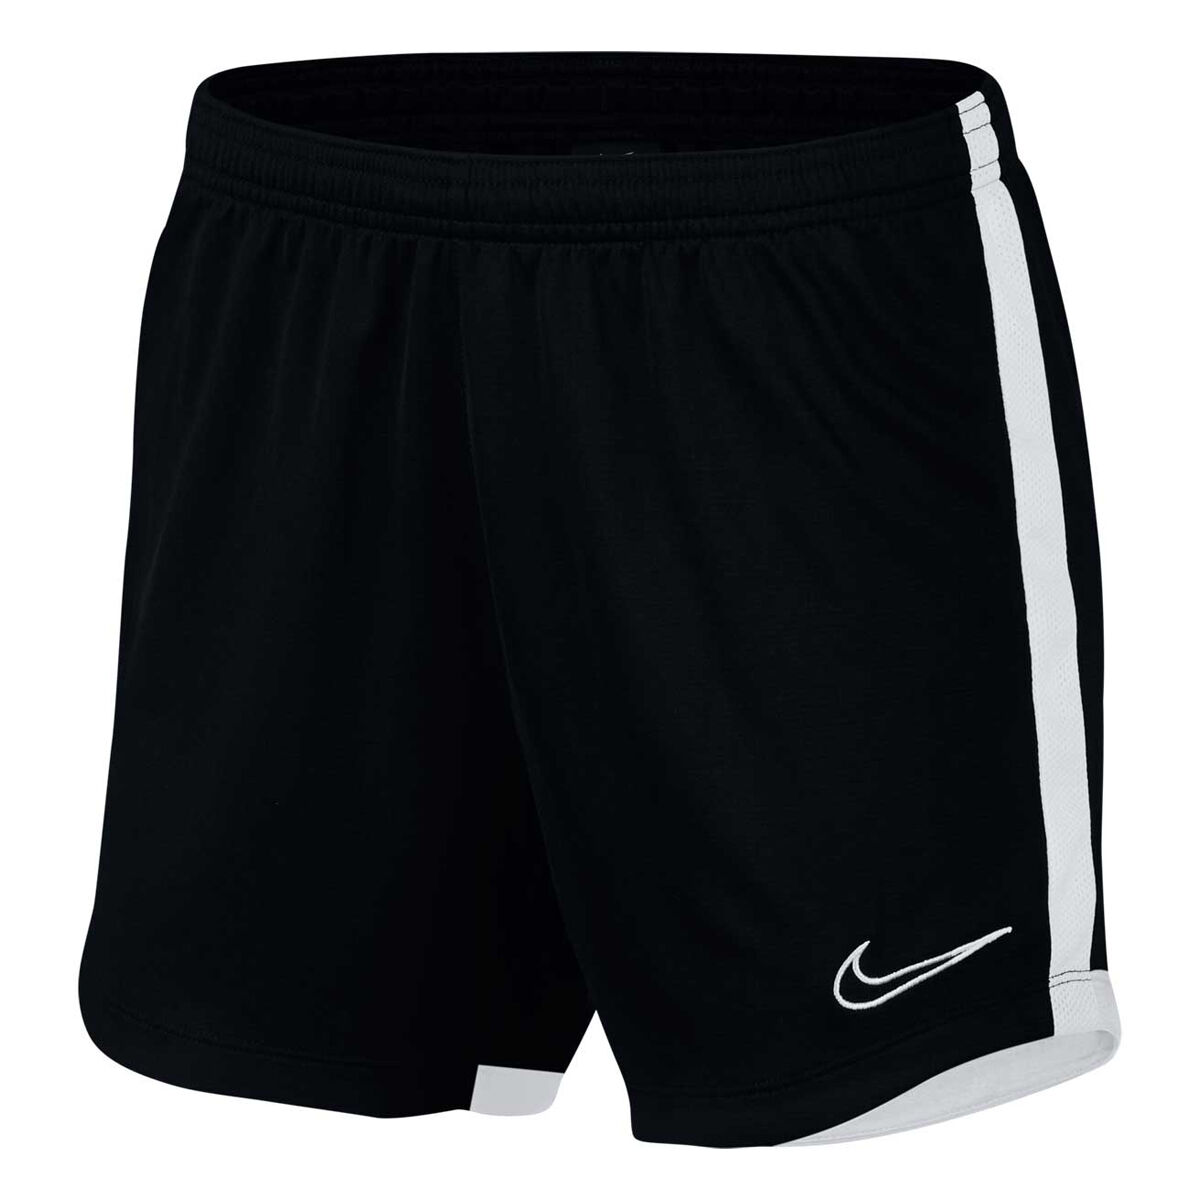 nike academy football shorts cheap online